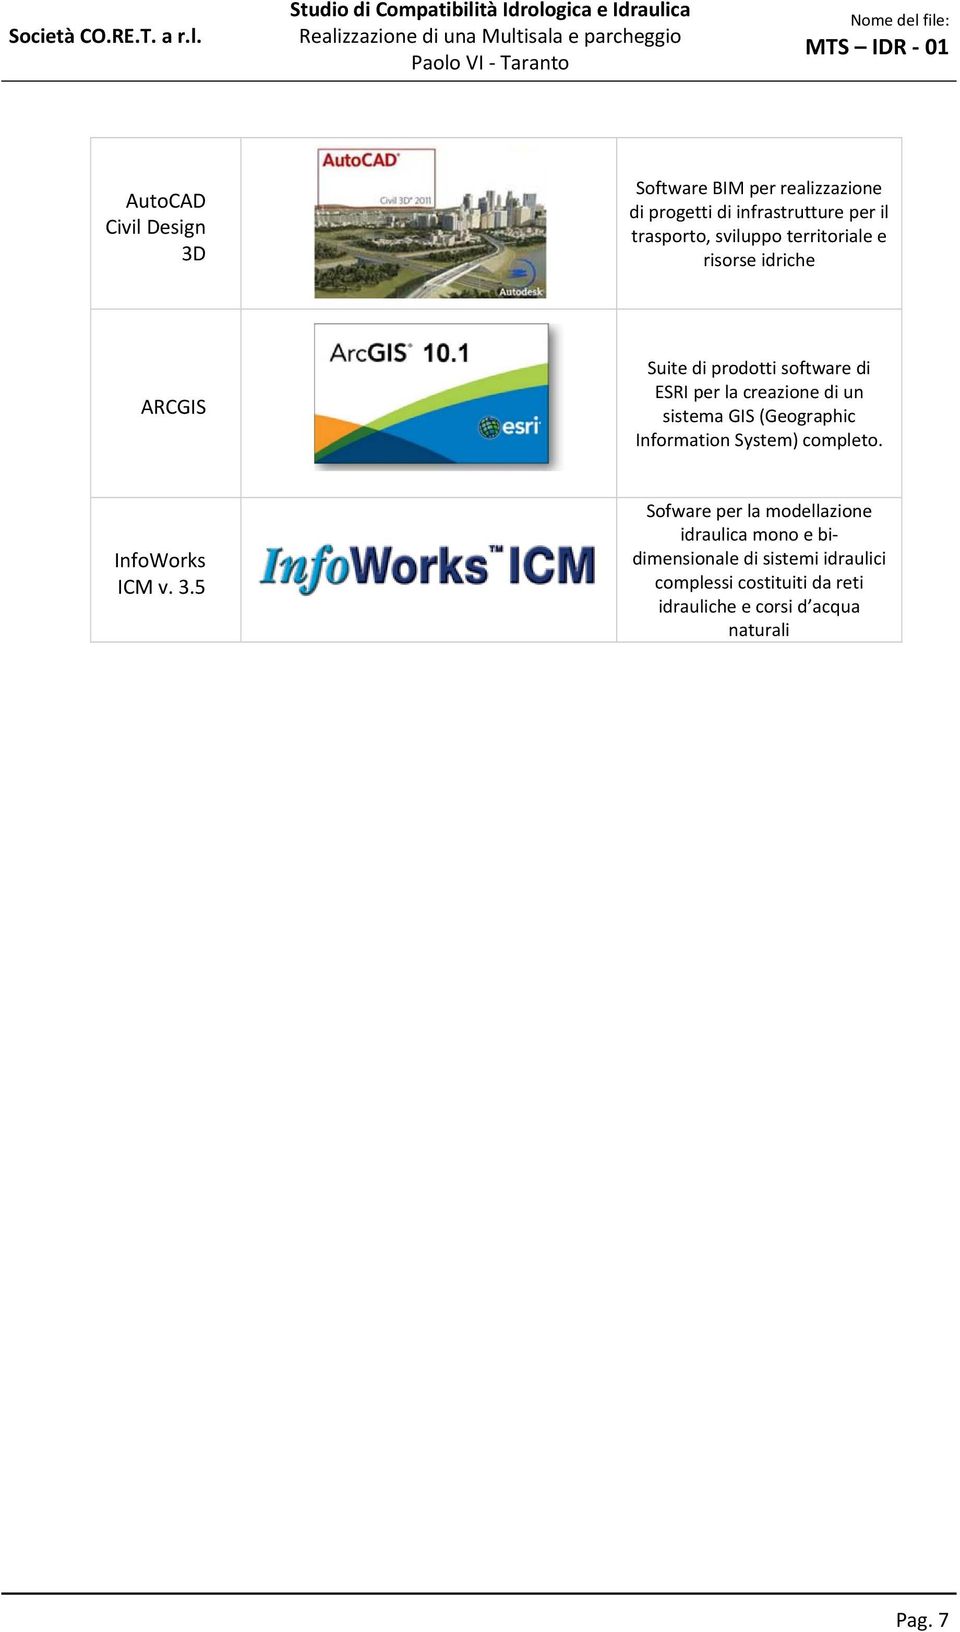 sistema GIS (Geographic Information System) completo. InfoWorks ICM v. 3.